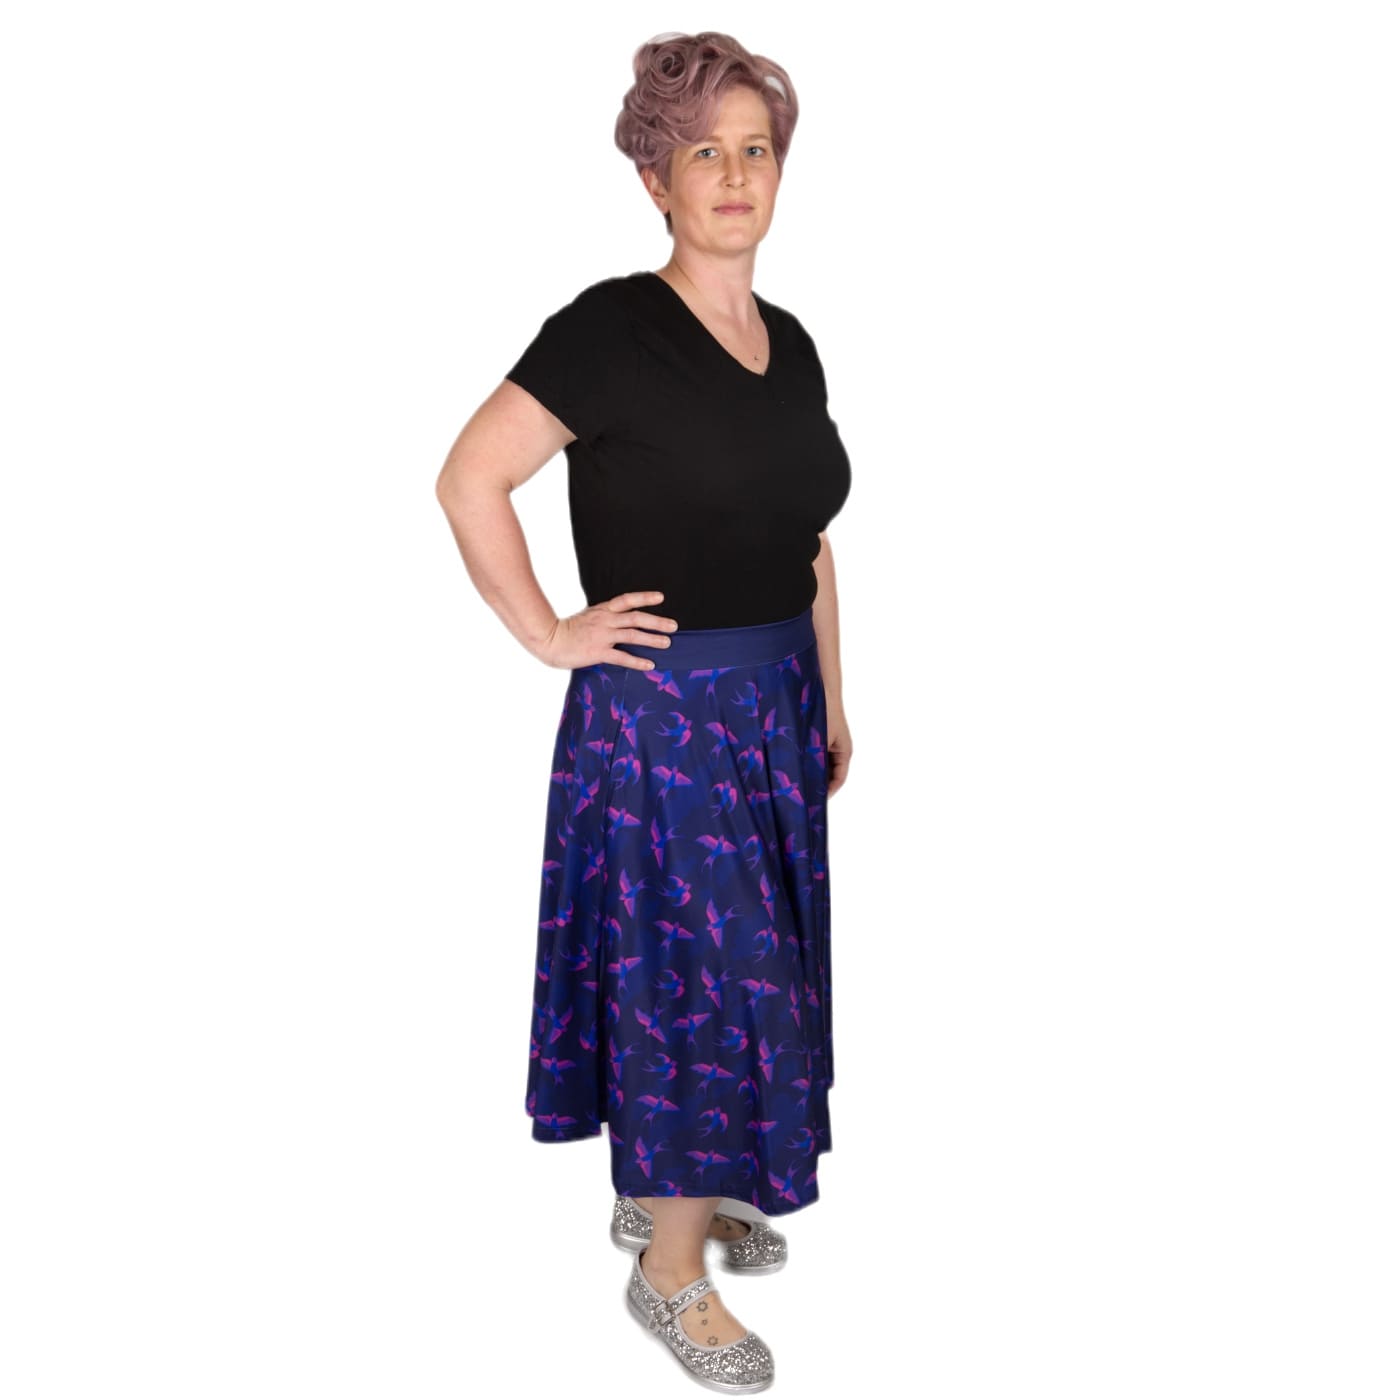 Swoop Swishy Skirt by RainbowsAndFairies.com.au (Swallows - Birds - Purple - Blue - Vintage Inspired - Kitsch - Skirt With Pockets - Circle Skirt) - SKU: CL_SWISH_SWOOP_ORG - Pic-06